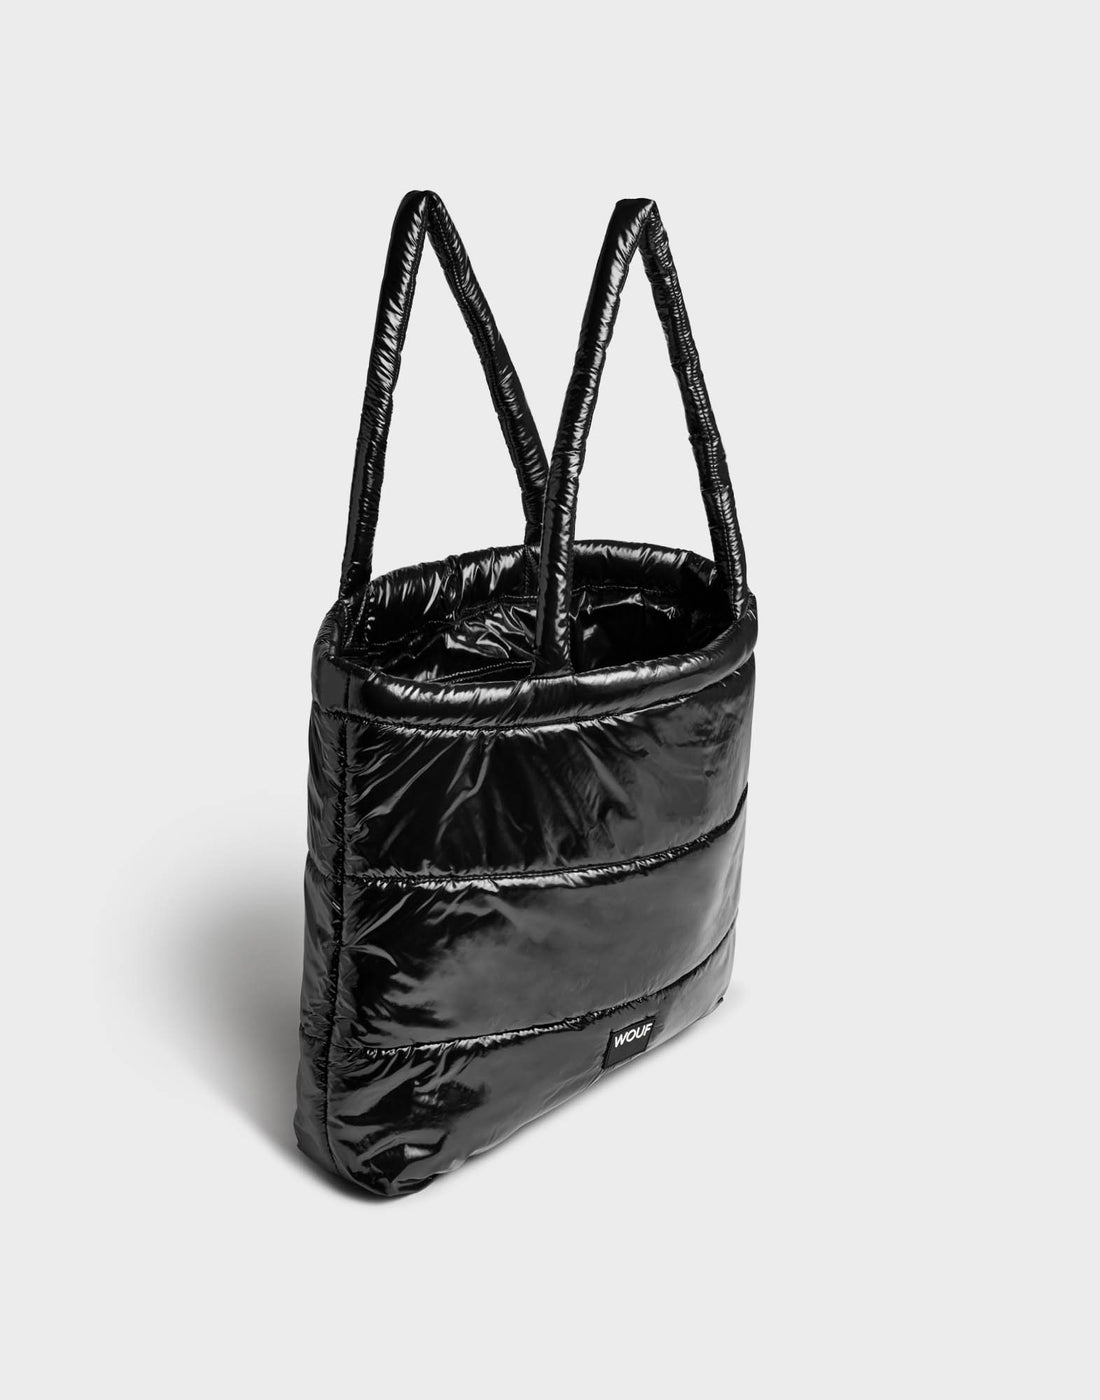 WOUF Black Glossy Tote Bag